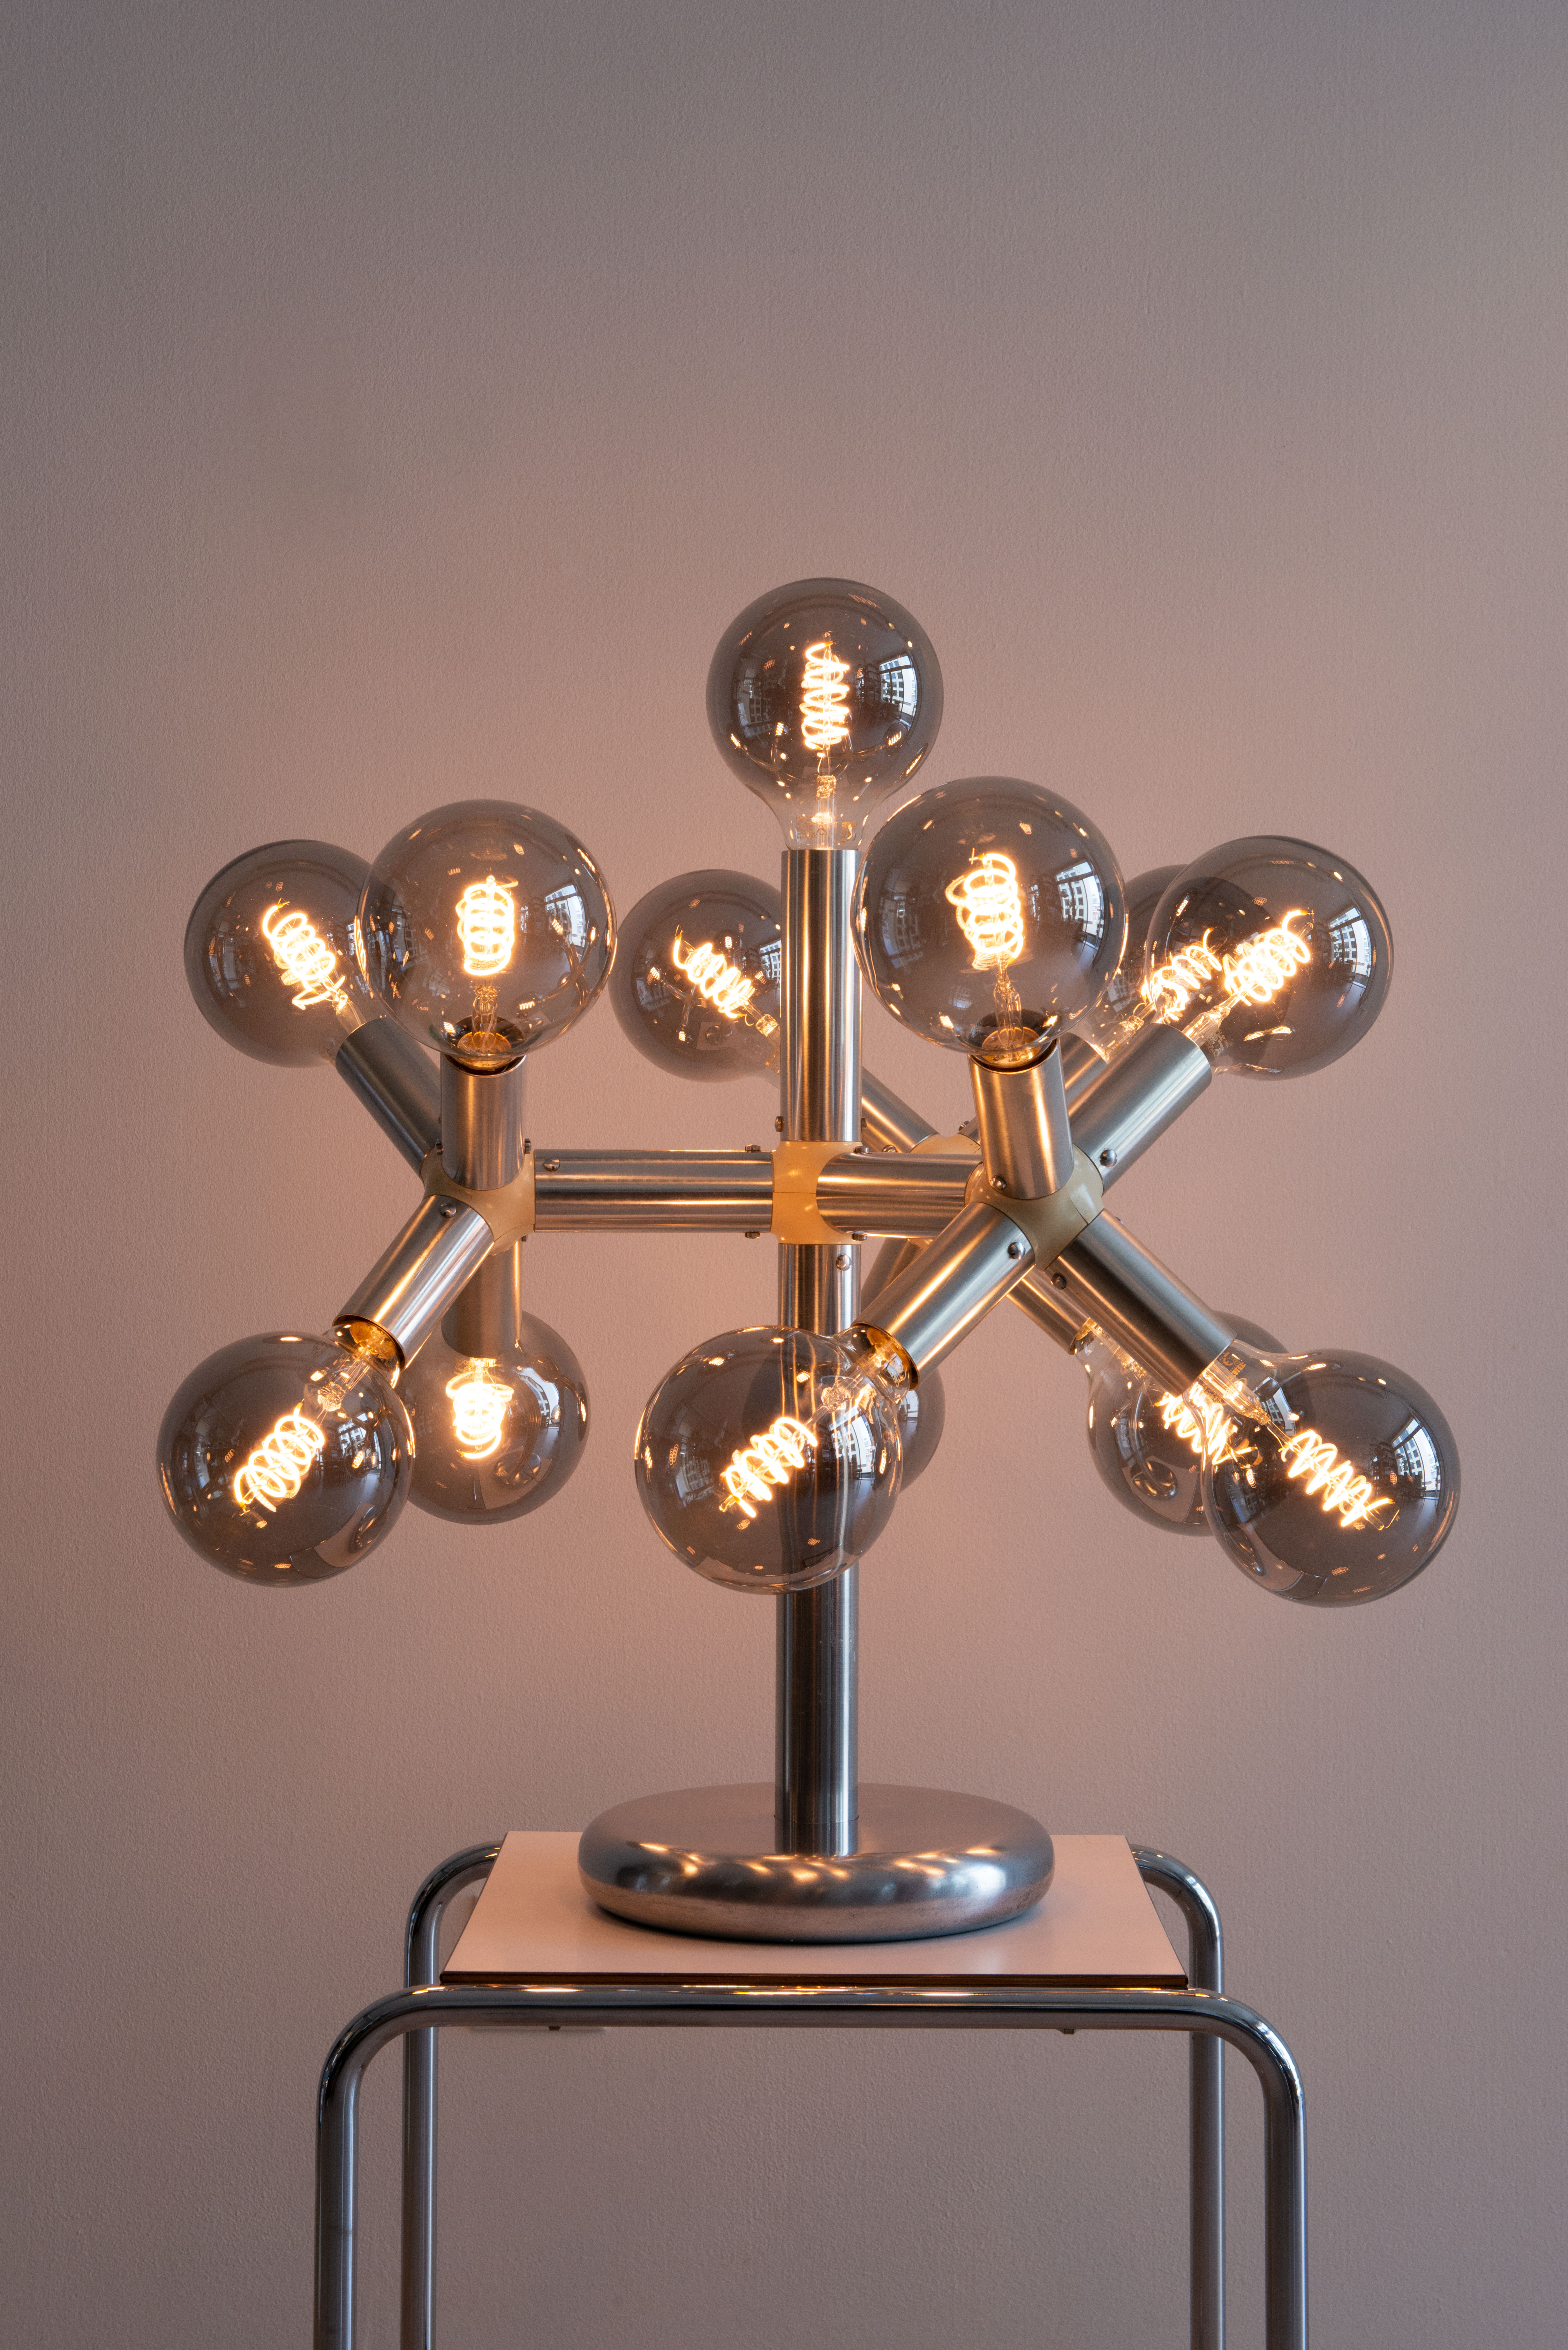 Atomic Table Lamp by Trix and Robert Haussmann. Made by Swiss Lamps International in Switzerland, 1960s. Available at heyday möbel, Grubenstrasse 19, 8045 Zürich, Switzerland.